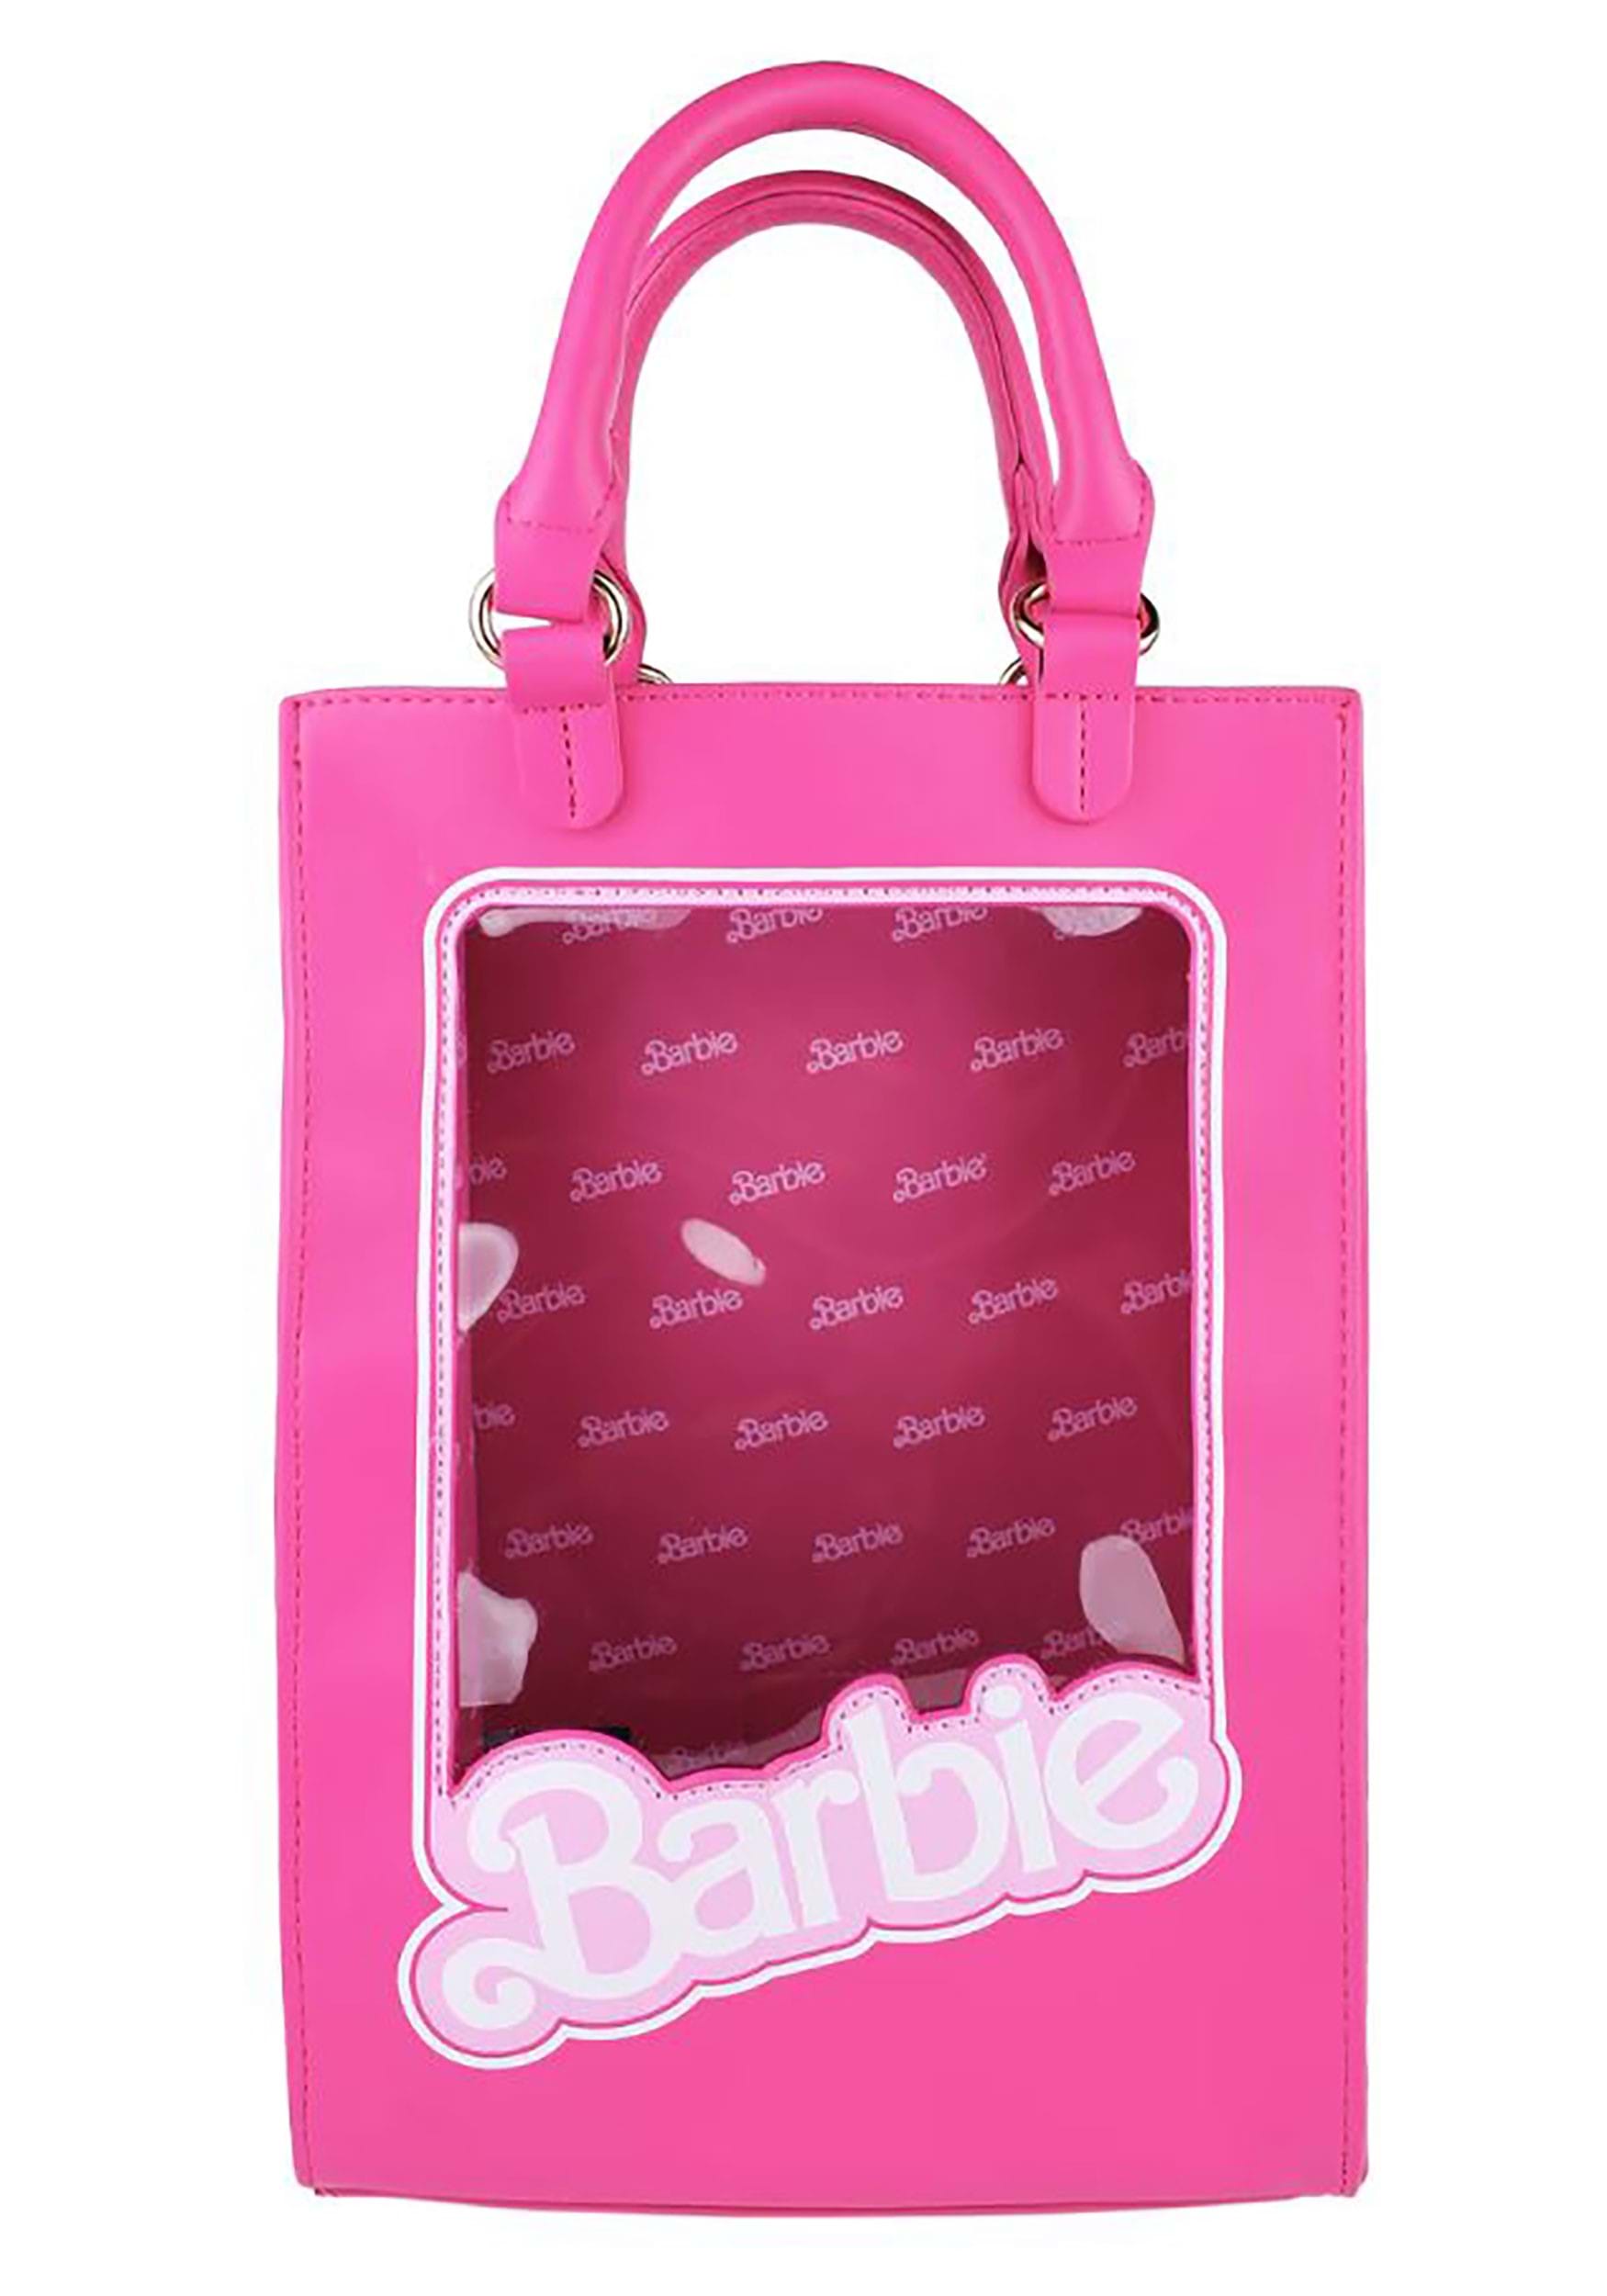 https://images.halloweencostumes.com/products/93702/2-1-282047/cakeworthy-pink-barbie-box-crossbody-bag-alt-1.jpg